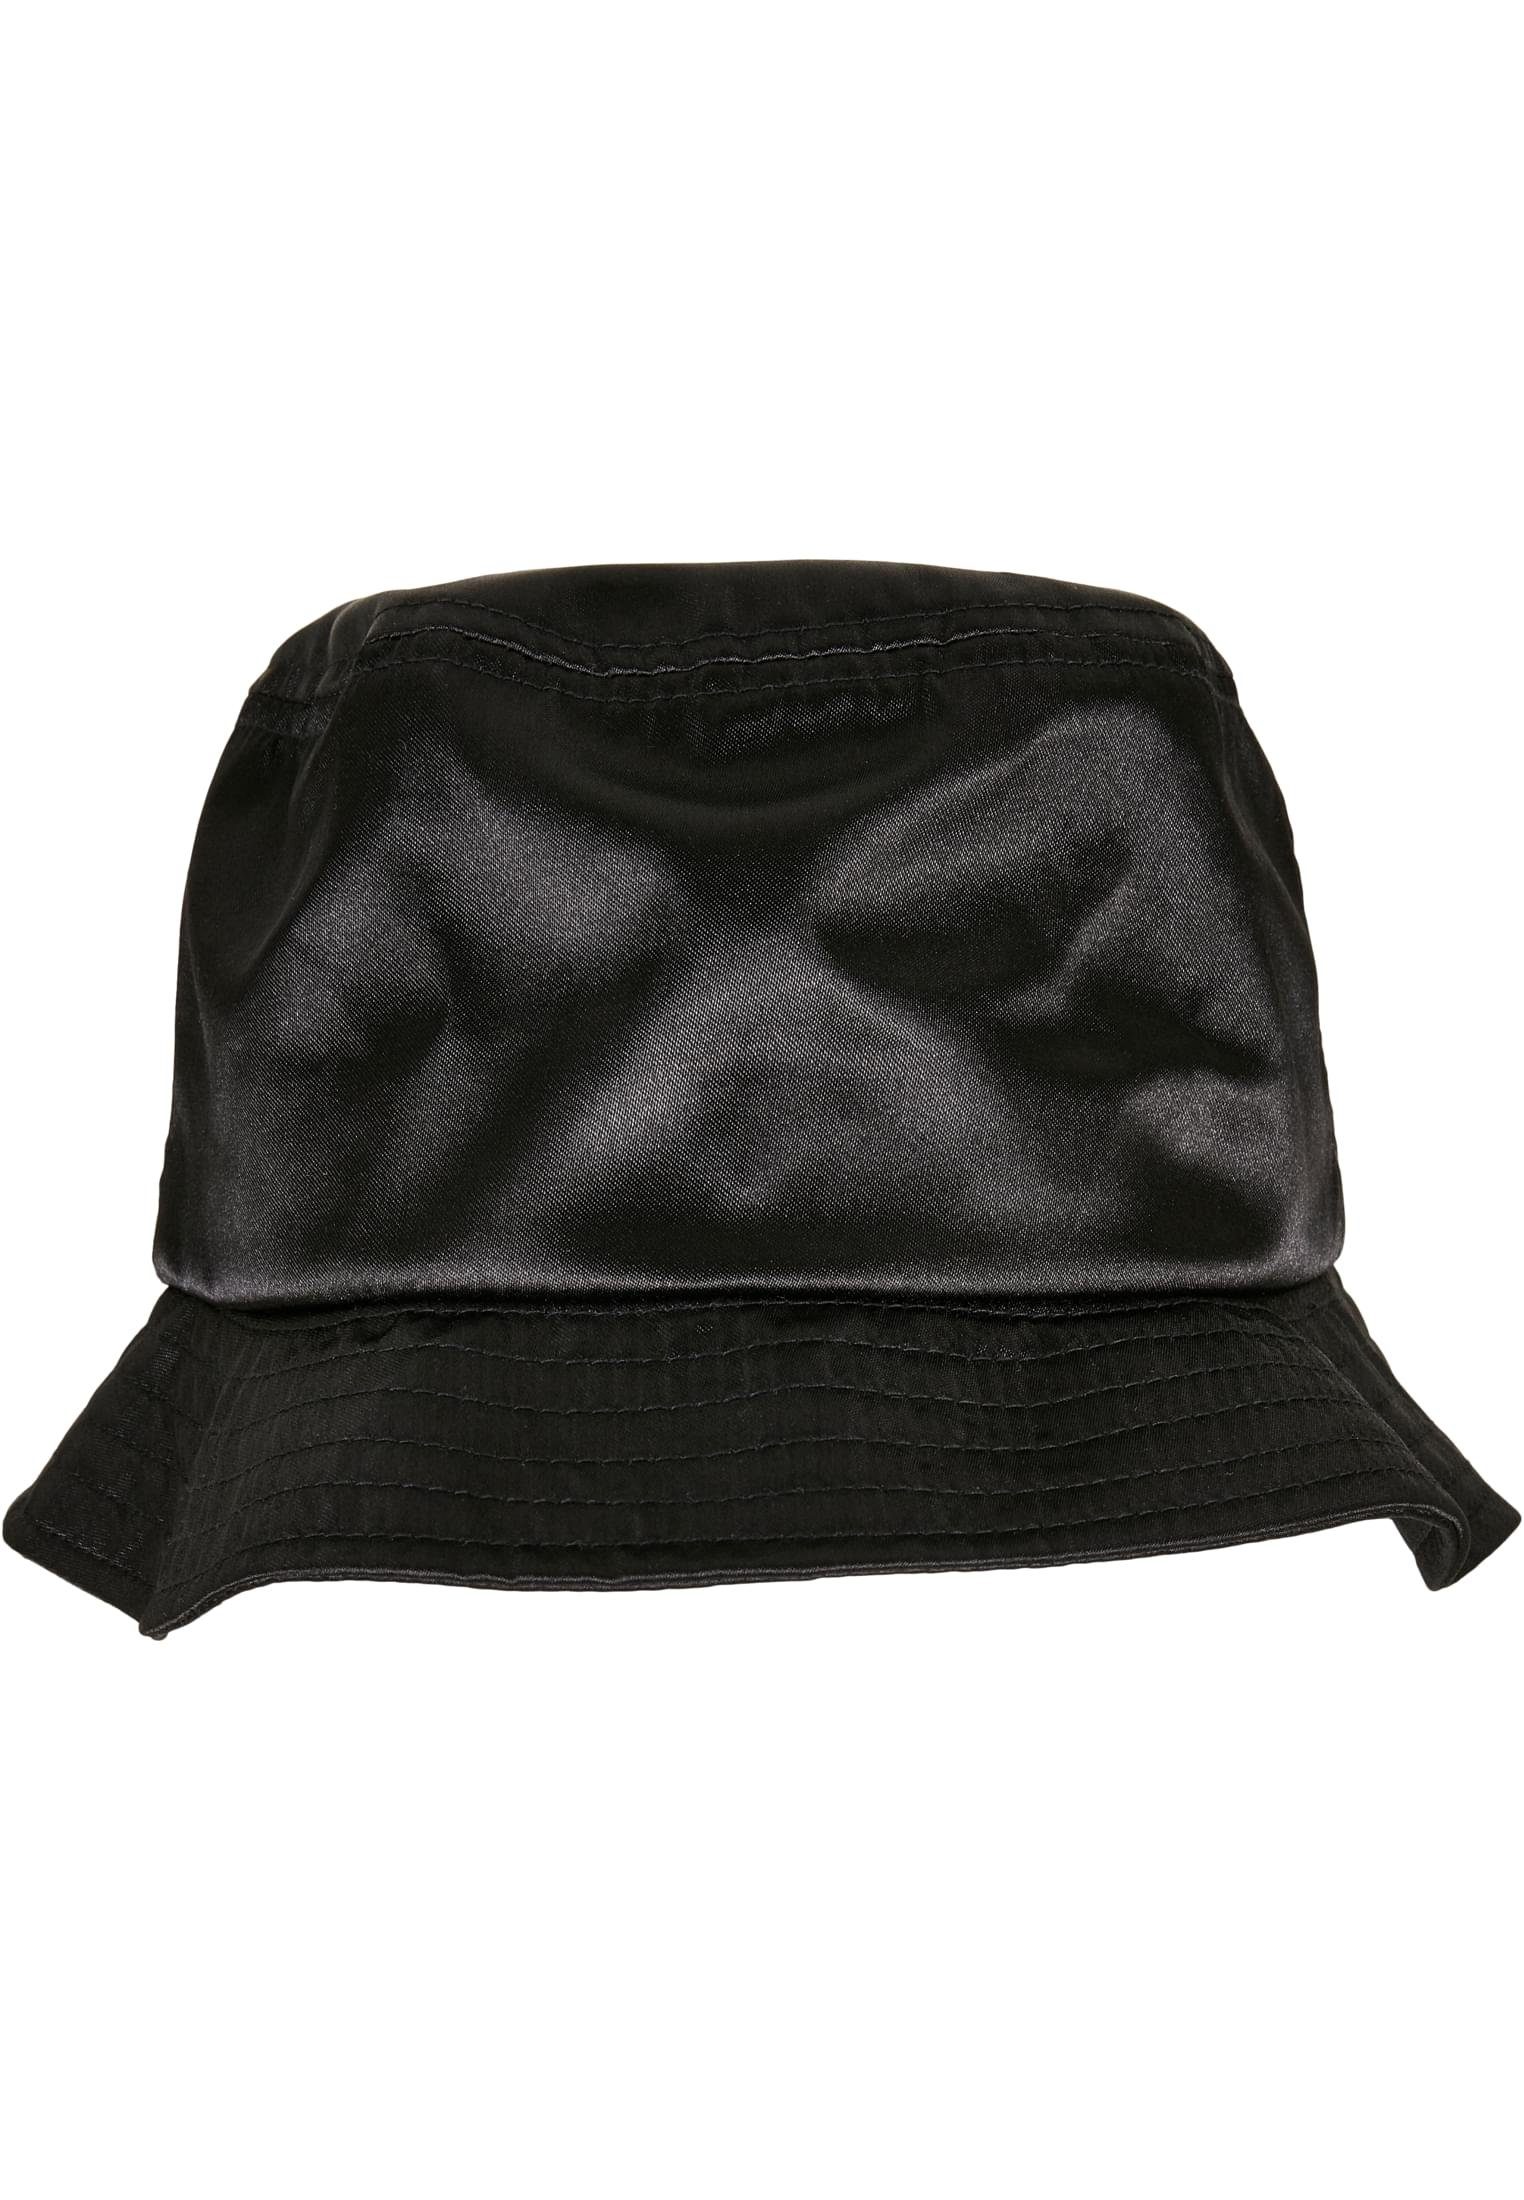 Hat black CLASSICS Bucket Satin Cap Trucker Unisex URBAN